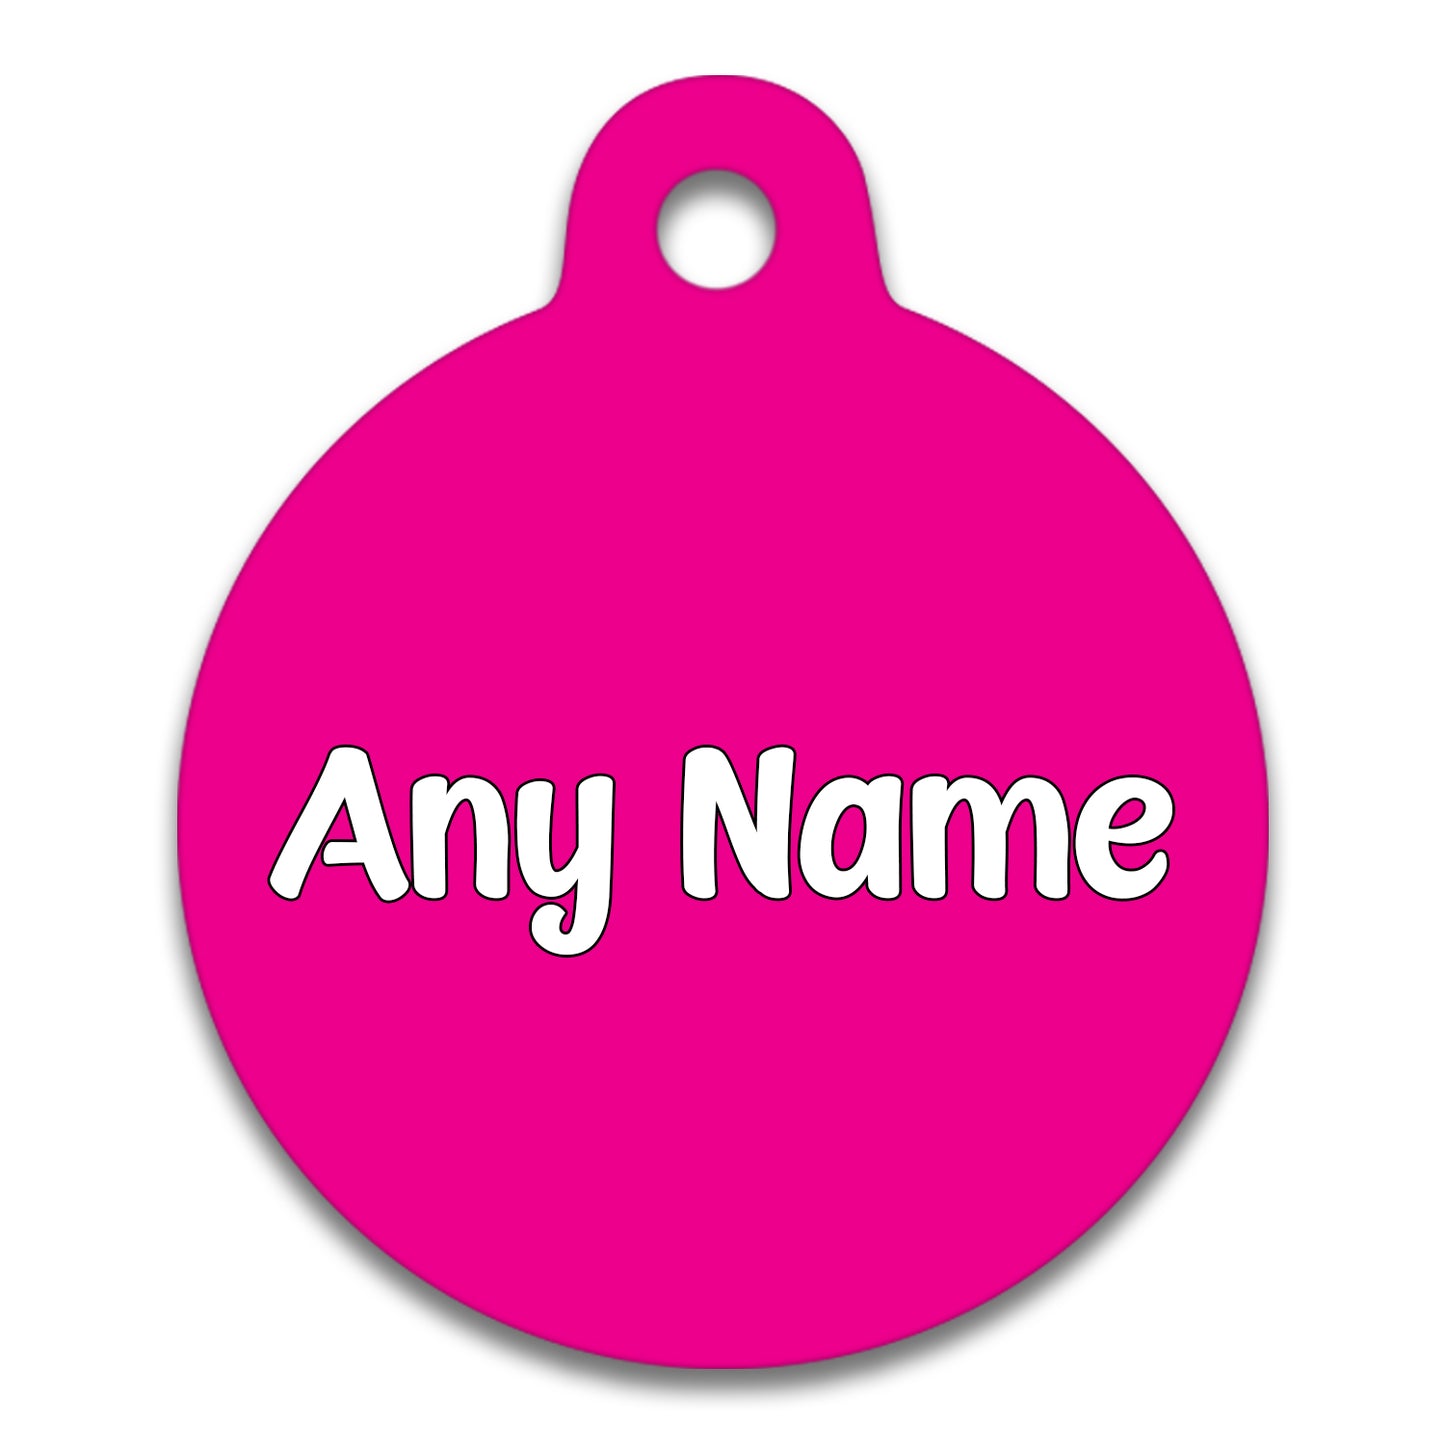 Hot Pink Plain Colour - Pet ID Tag